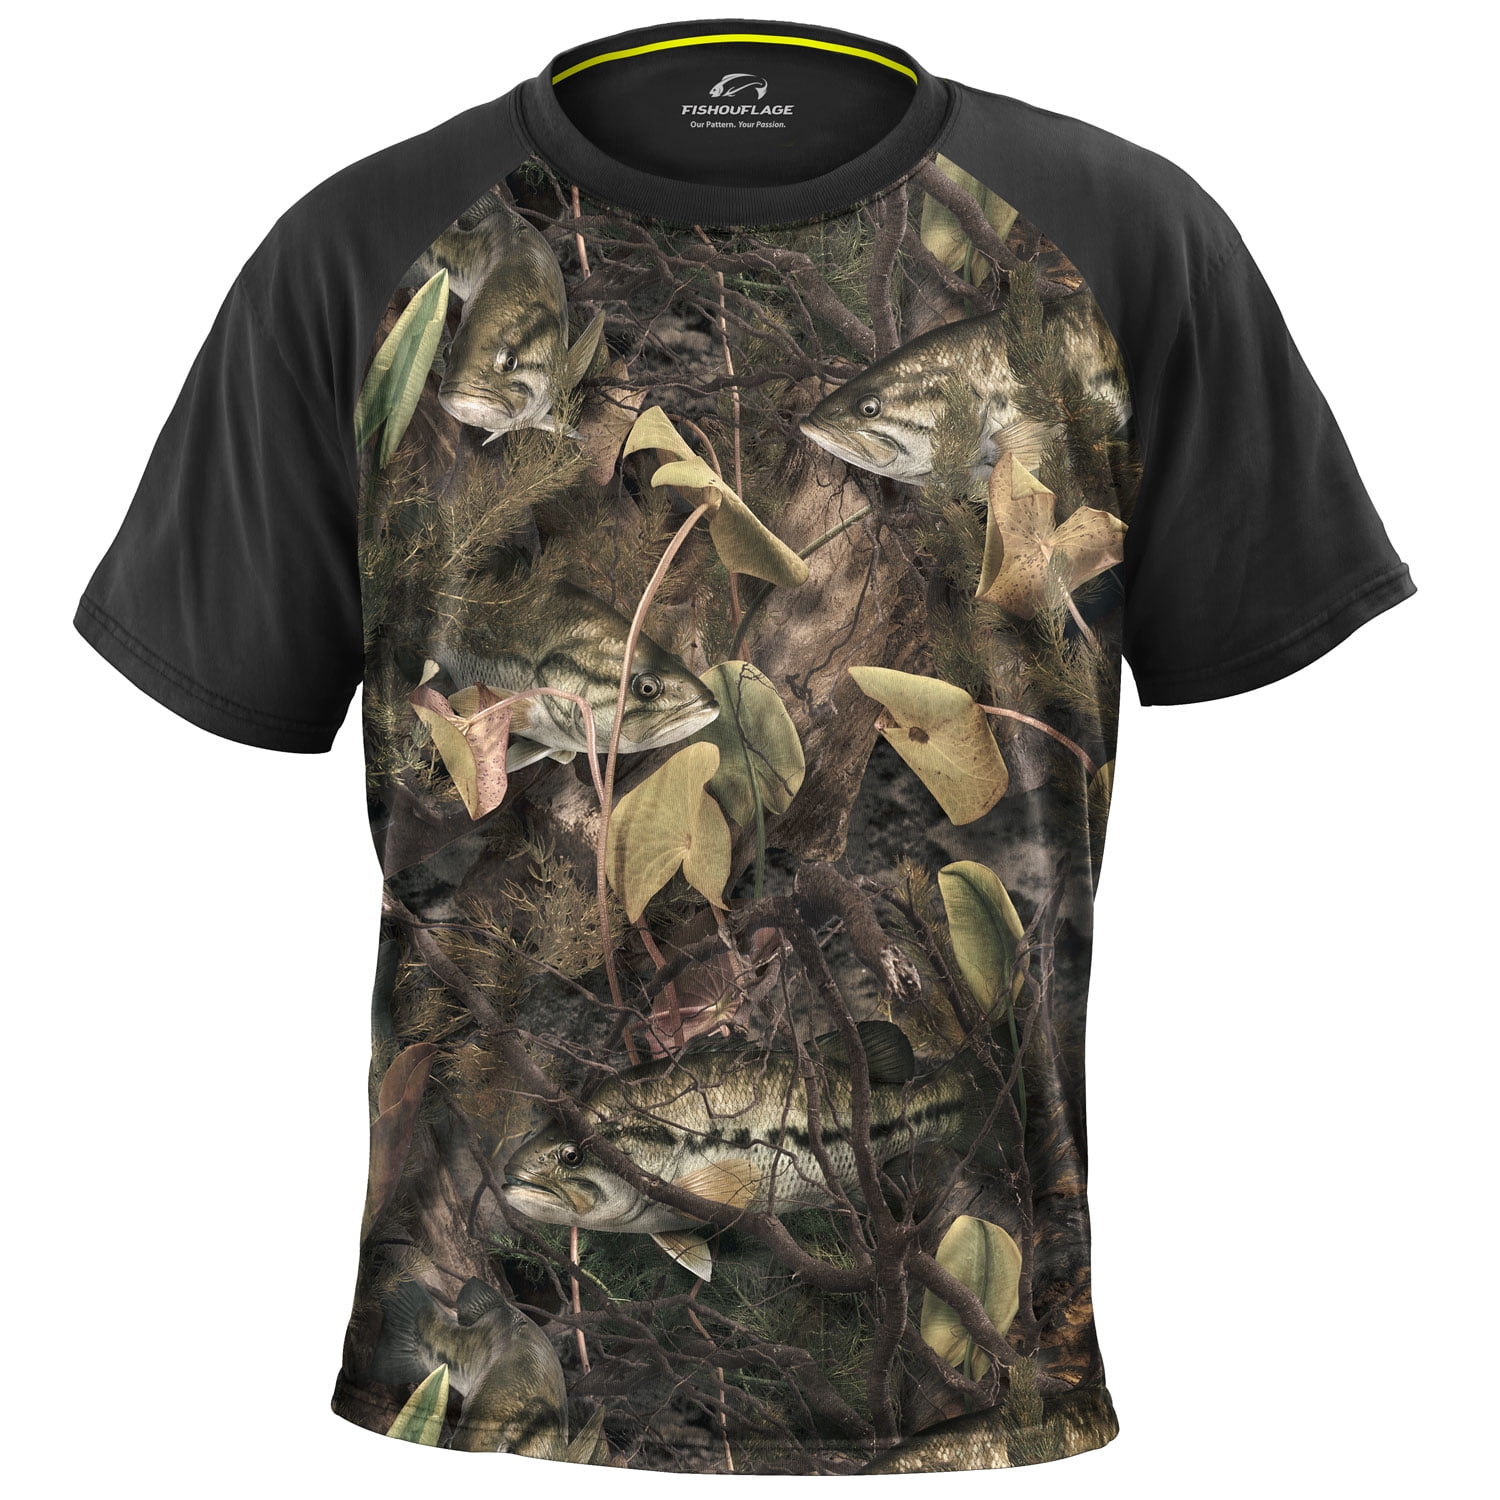 Fishouflage Crappie Camo Fishing Shirt – Riptide Short Sleeve Performance  Shirt for Men (XL) 